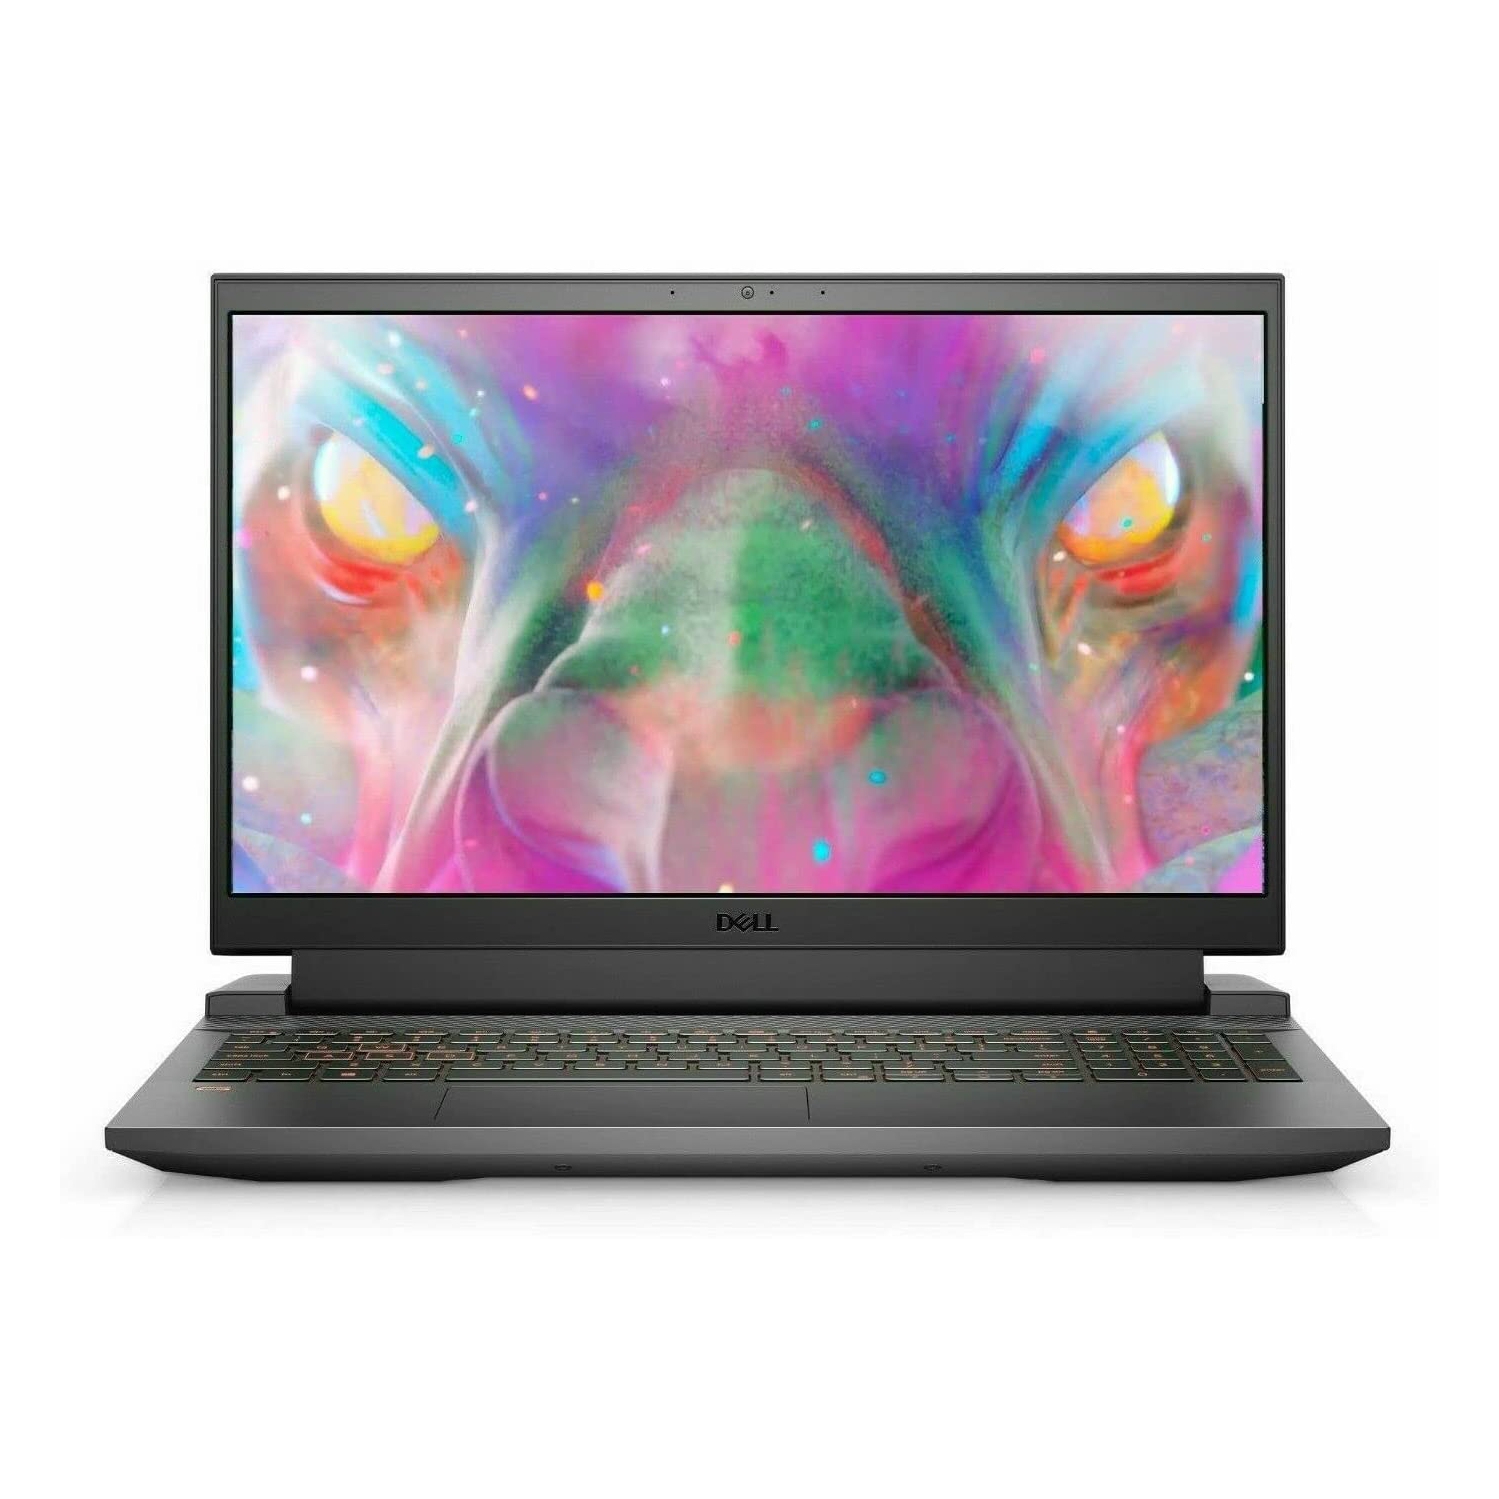 Dell G5 15 5510 Gaming 15.6" FHD Laptop (Intel Core i5-10500H, 8GB RAM, 256GB SSD, Windows 11 Home, NVIDIA GeForce GTX 1650 4GB) - Dark Shadow Grey - Damage Retail Box